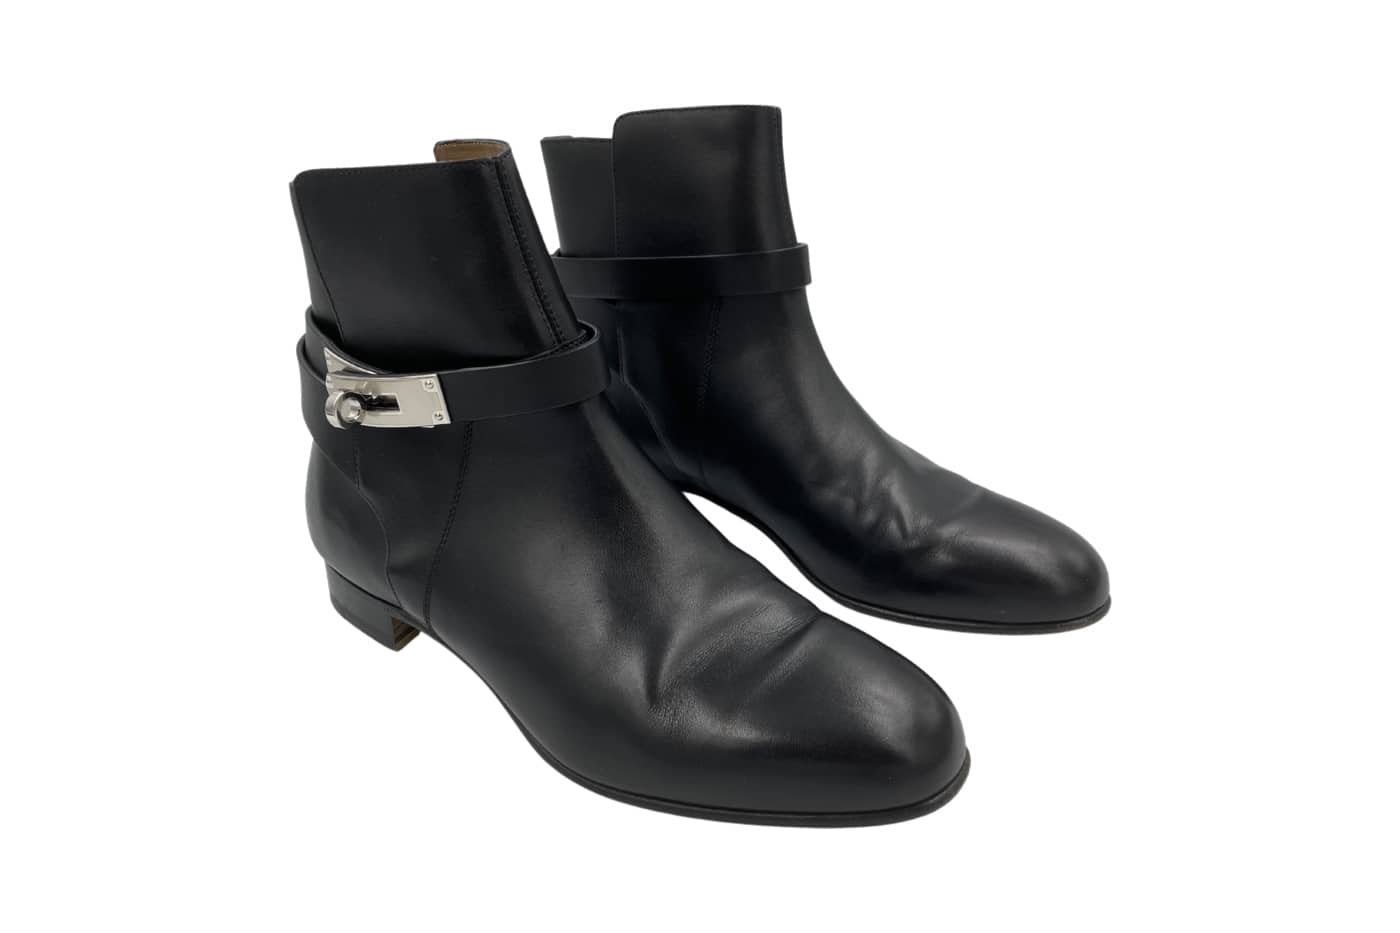 Hermès Boot Heel & Sole Protection — SoleHeeled